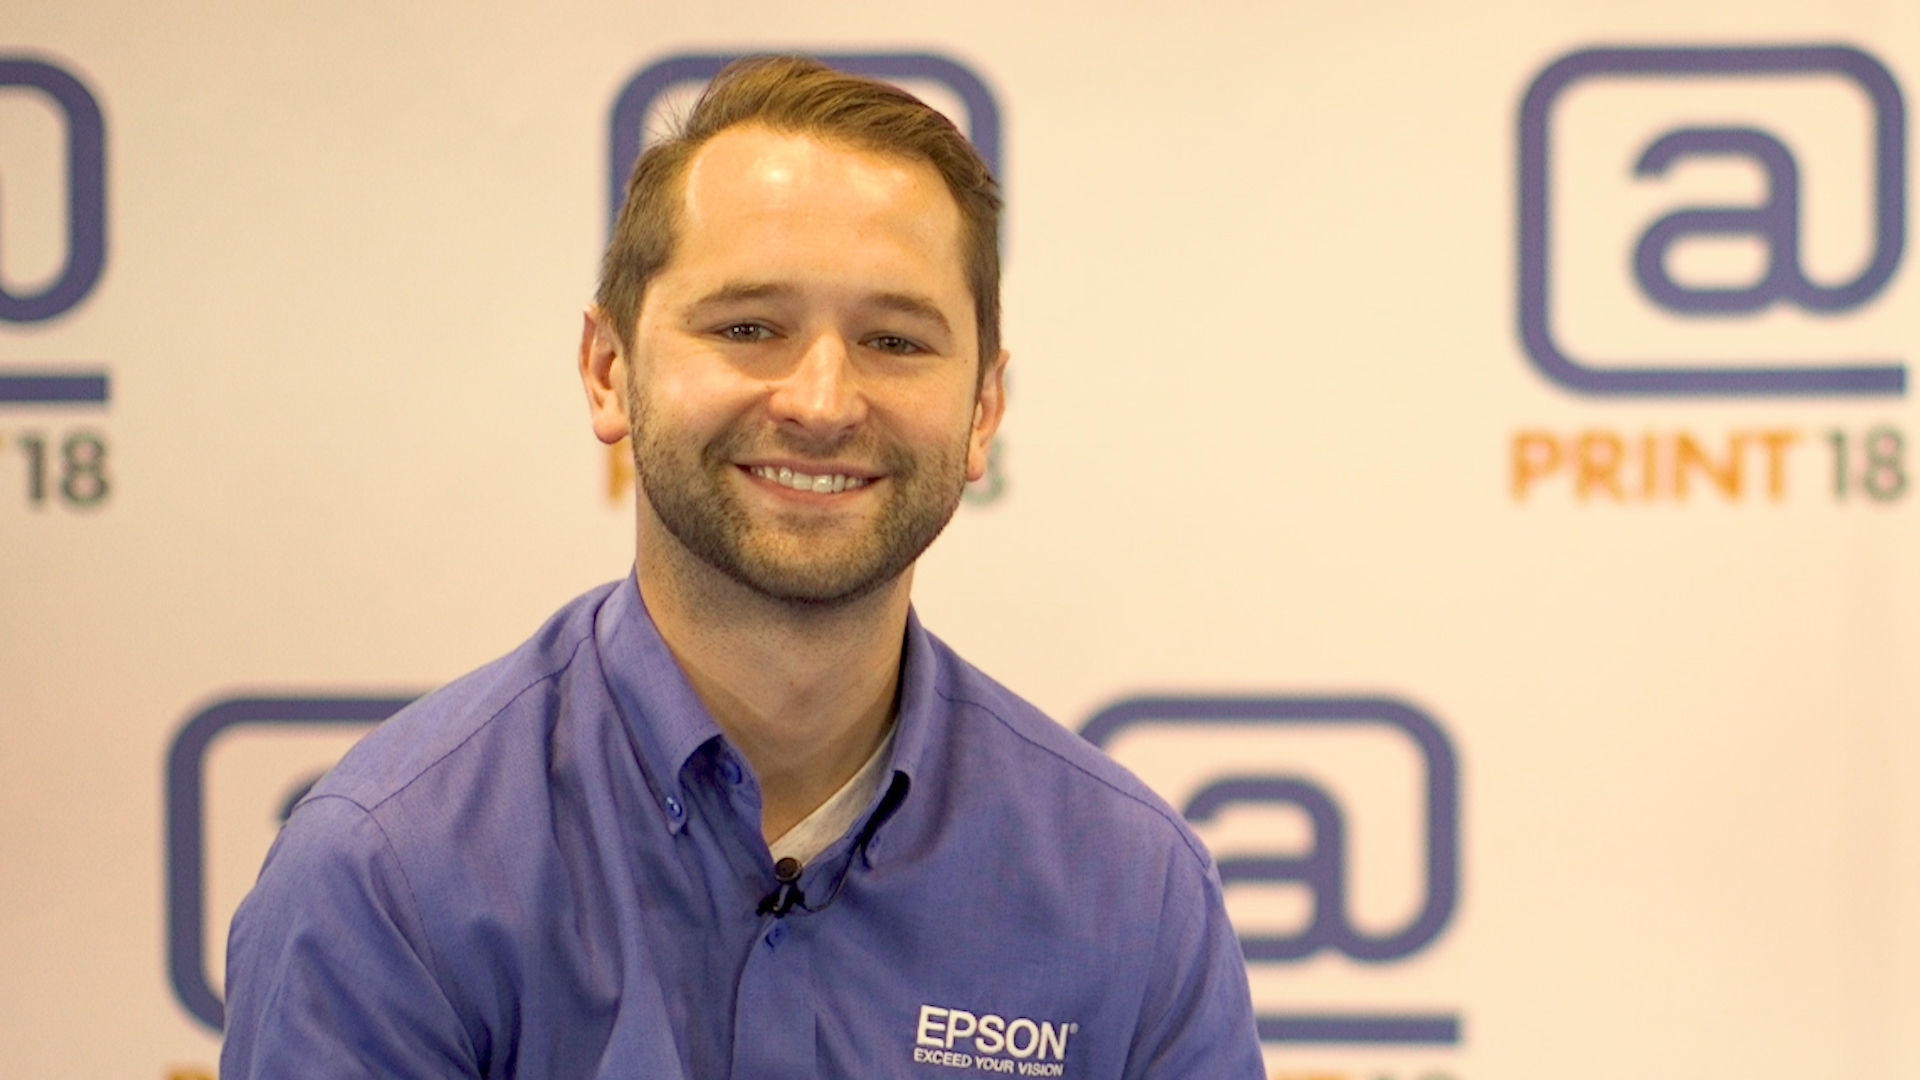 Epson Introduces New SureColor Technical Printer